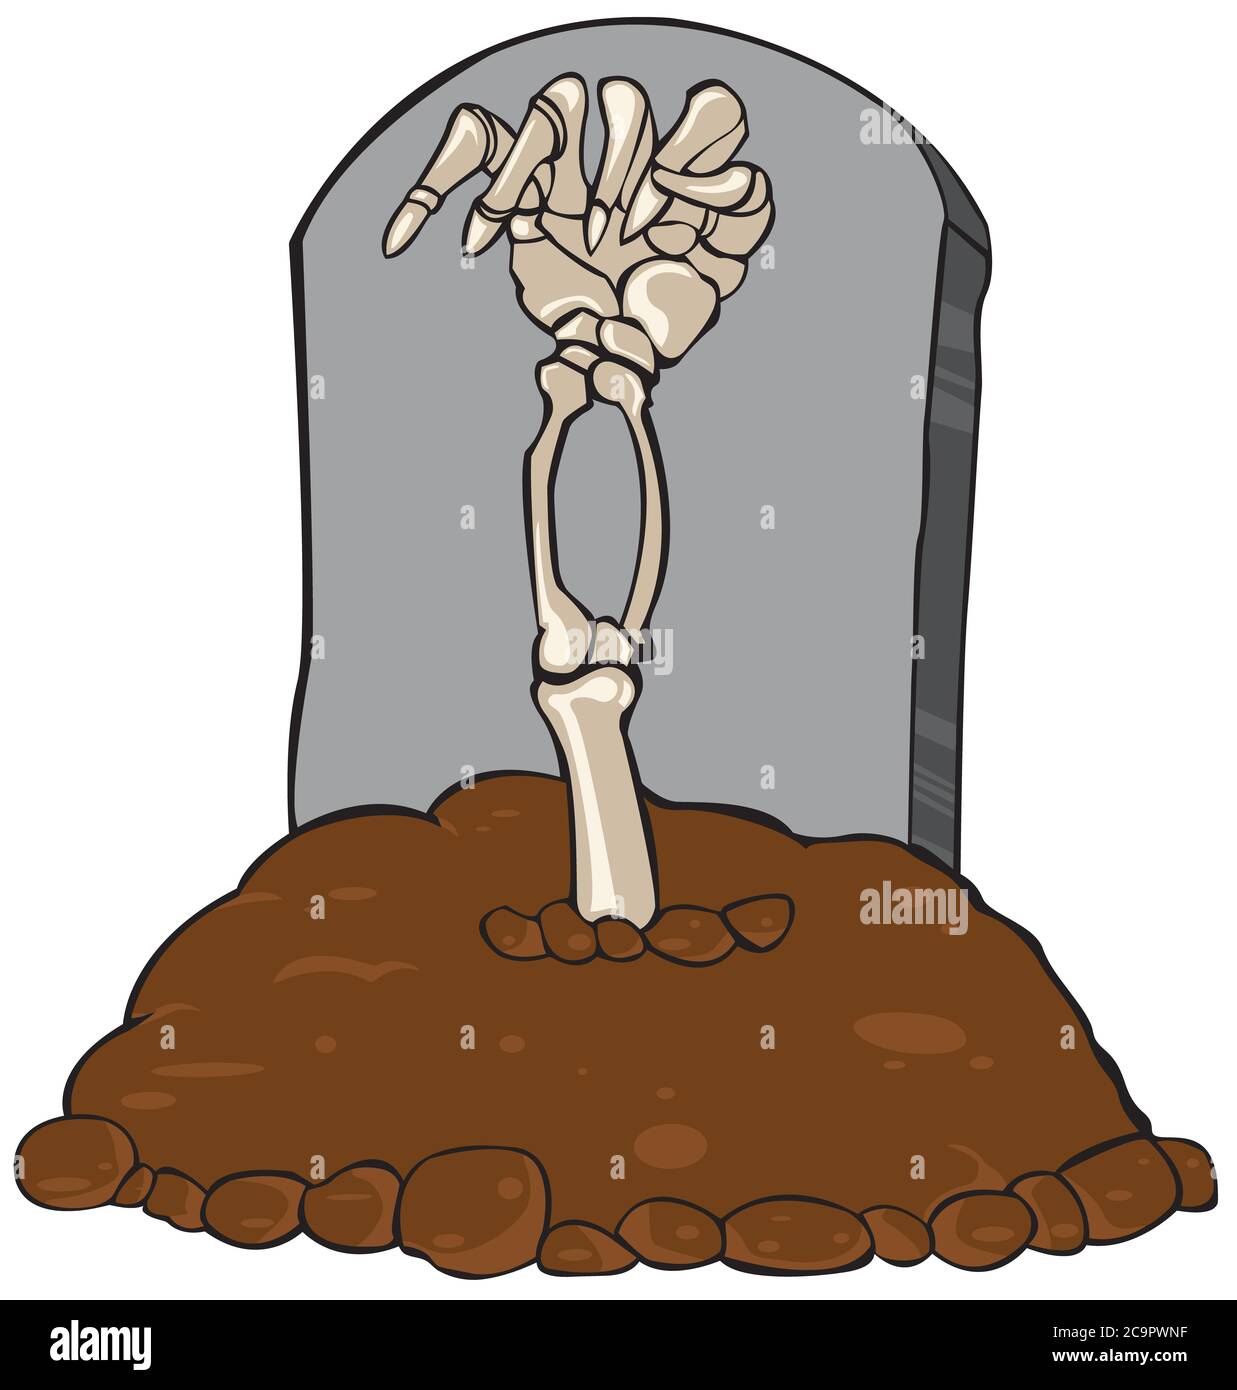 Rip-grab Grab Friedhof Halloween in Frieden ruhen Abbildung Stockfoto